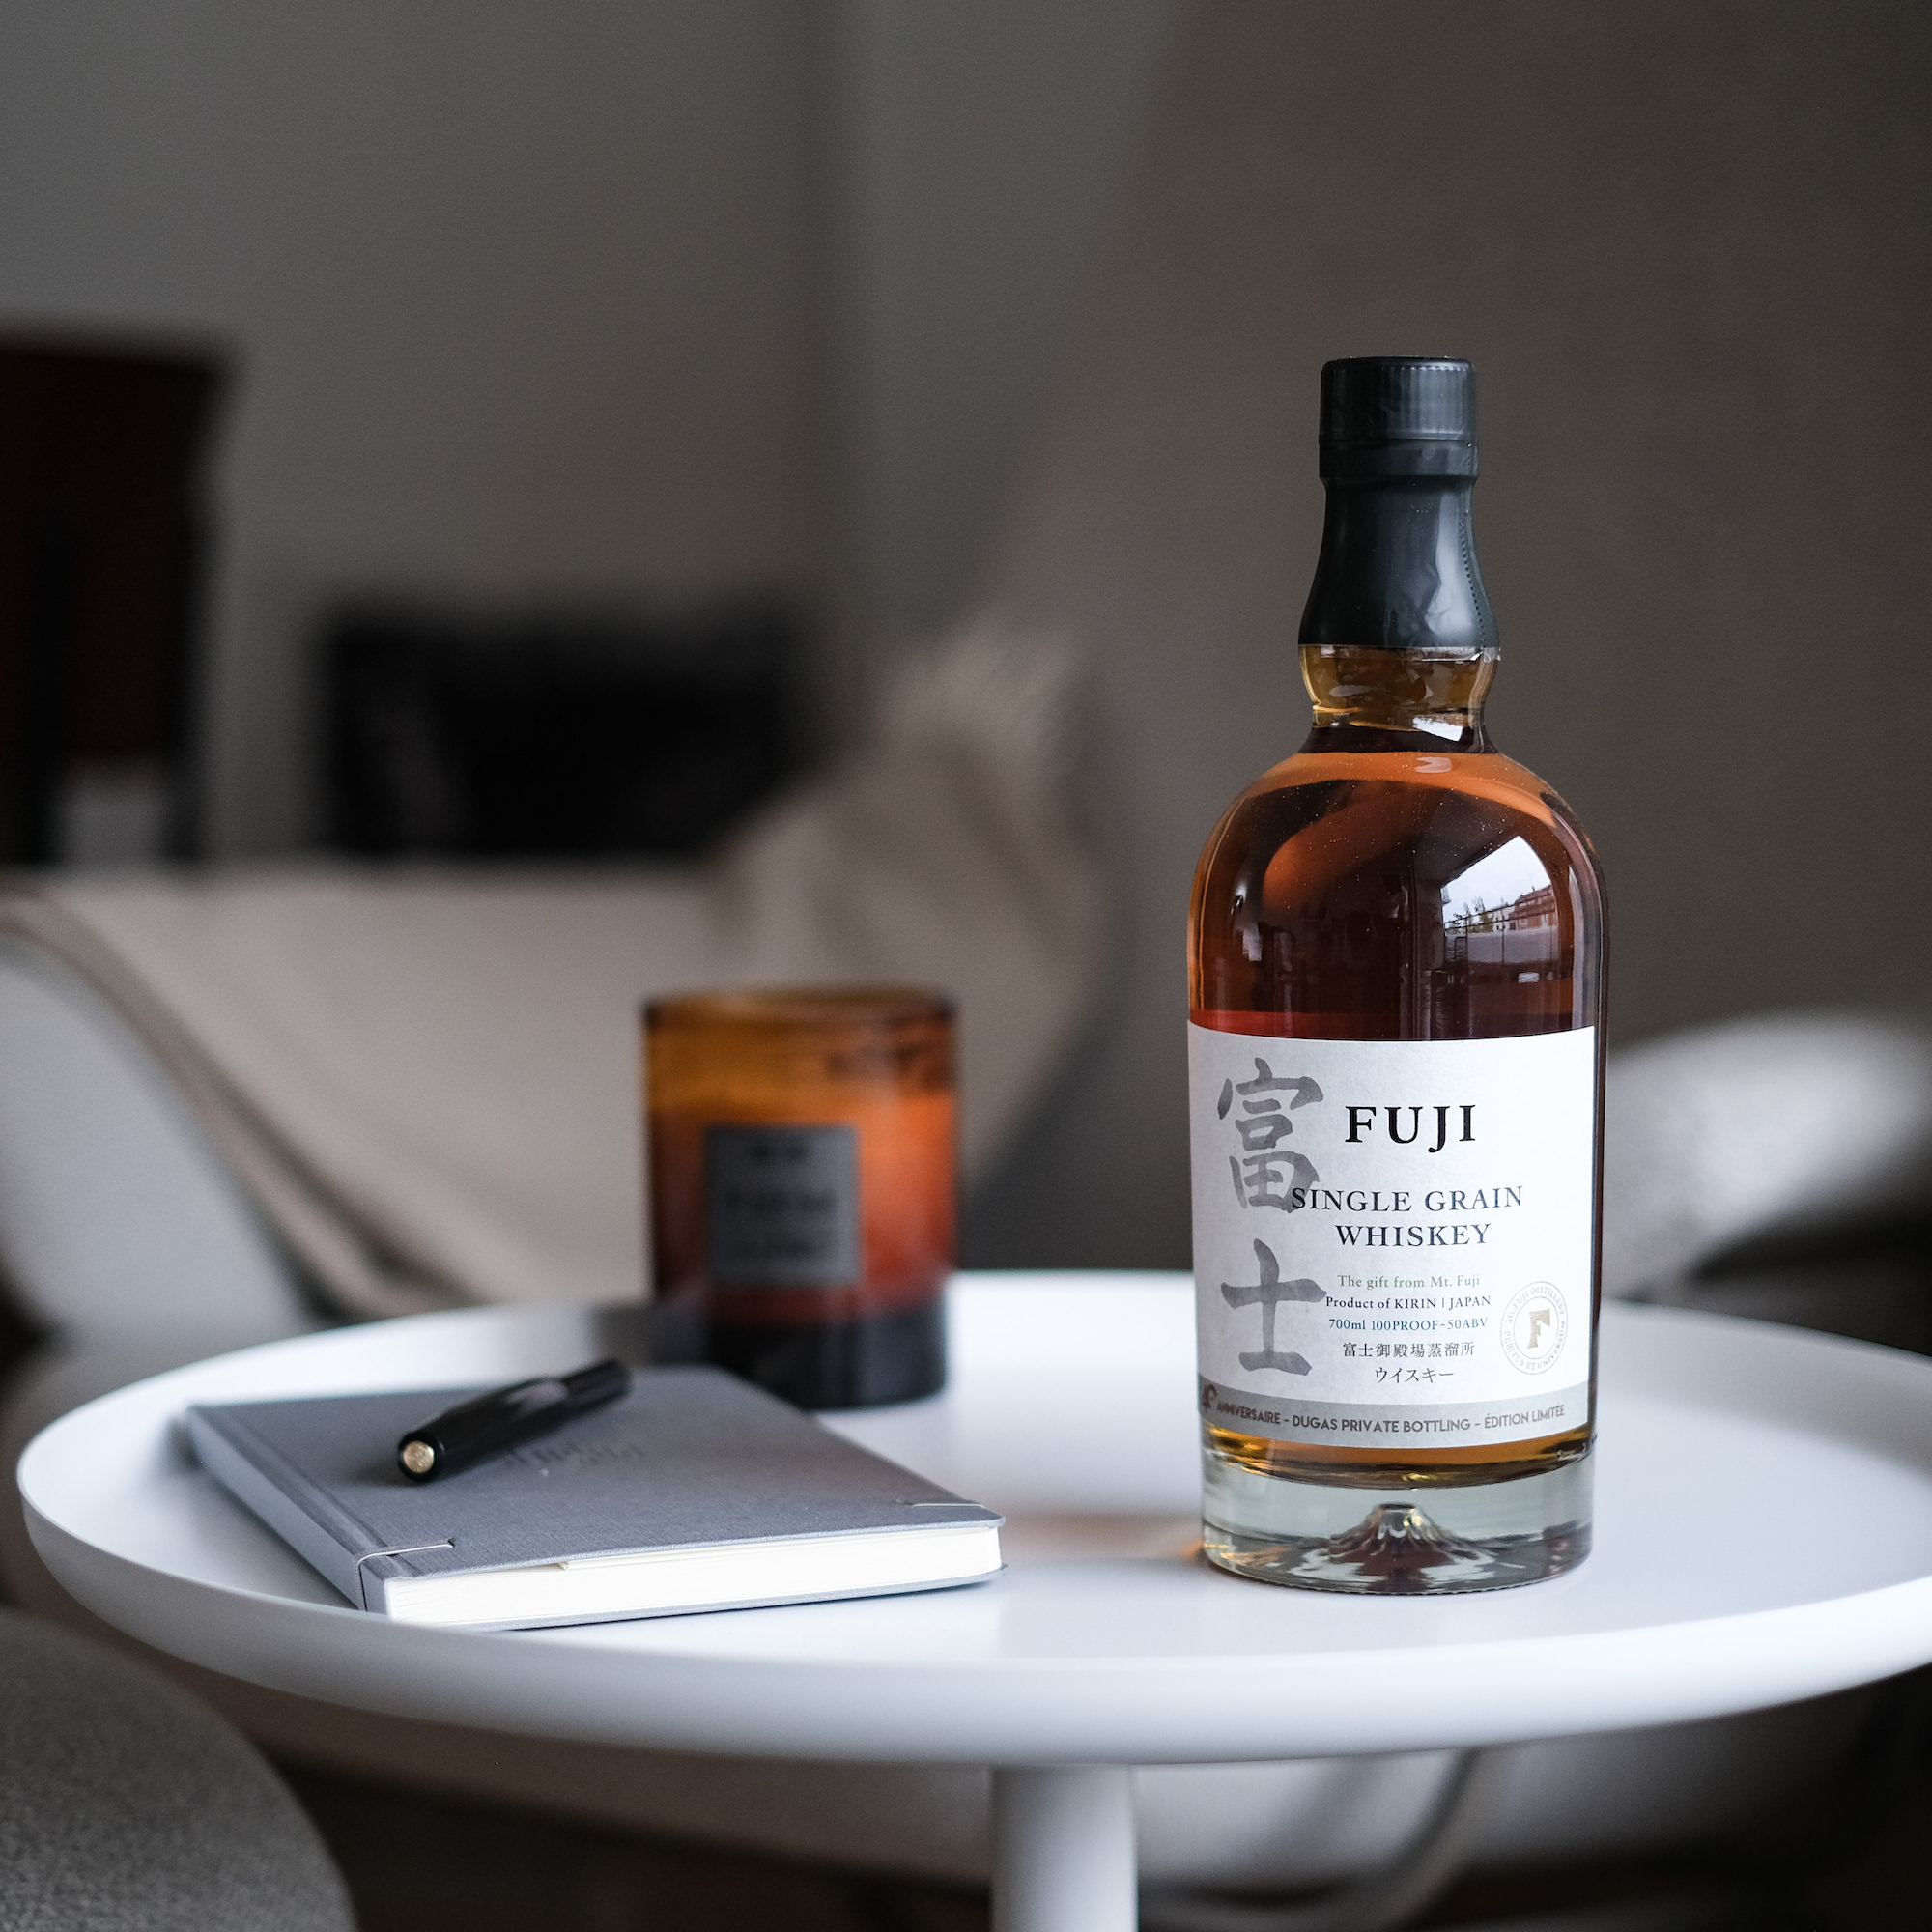 fuji single grain whiskey dugas private bottling edition limitee